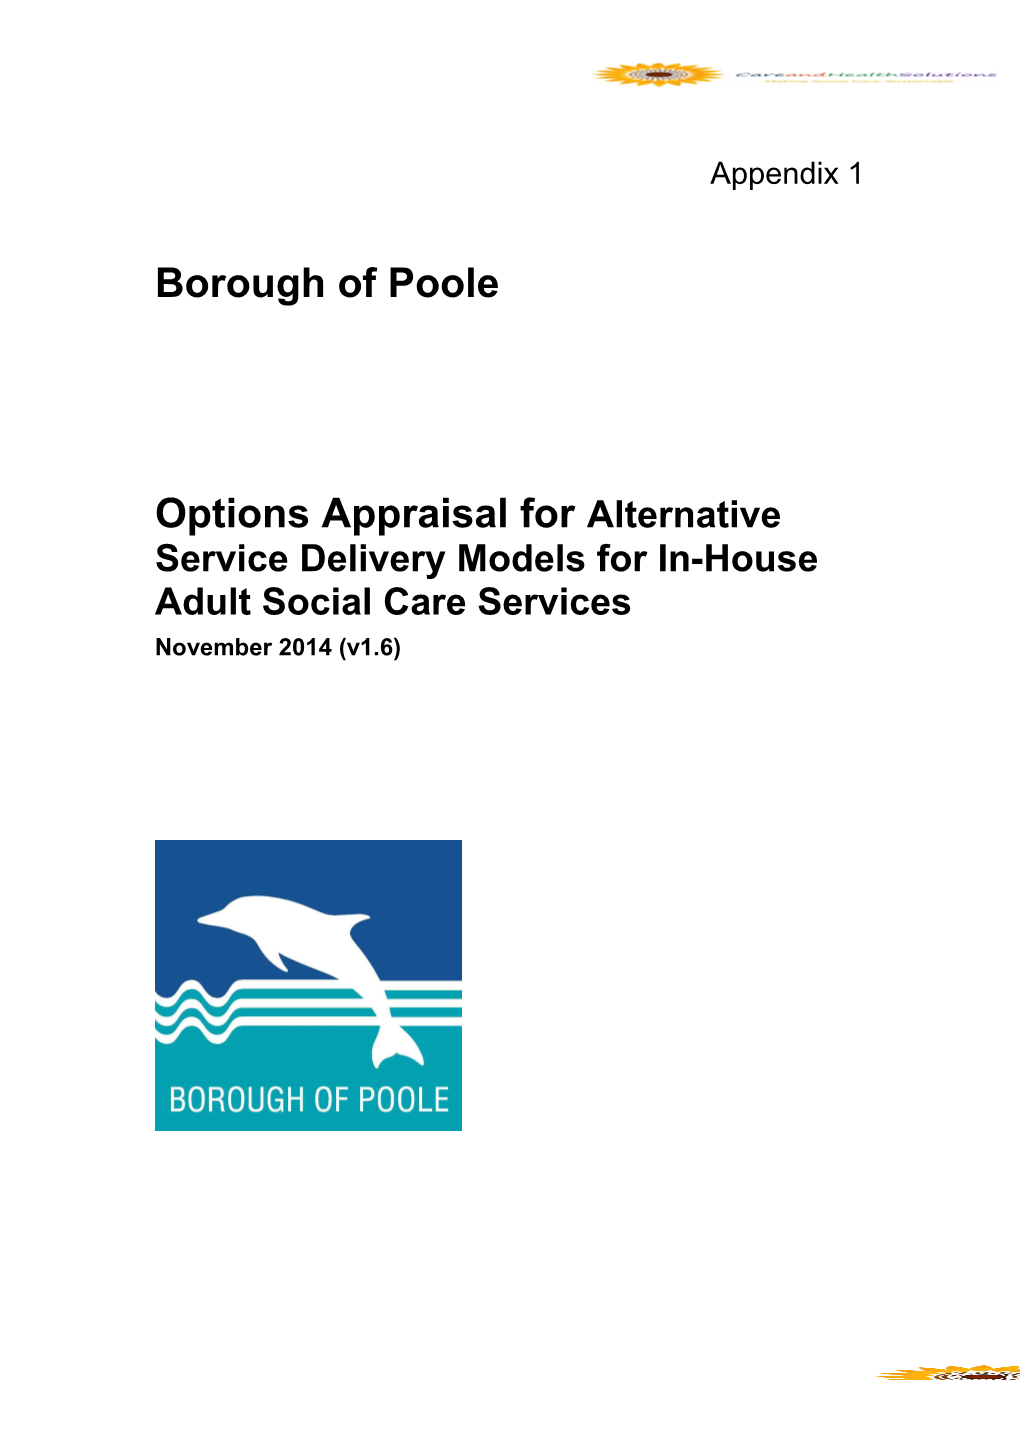 Alternative Service Delivery Models Enhanced Options Appraisal